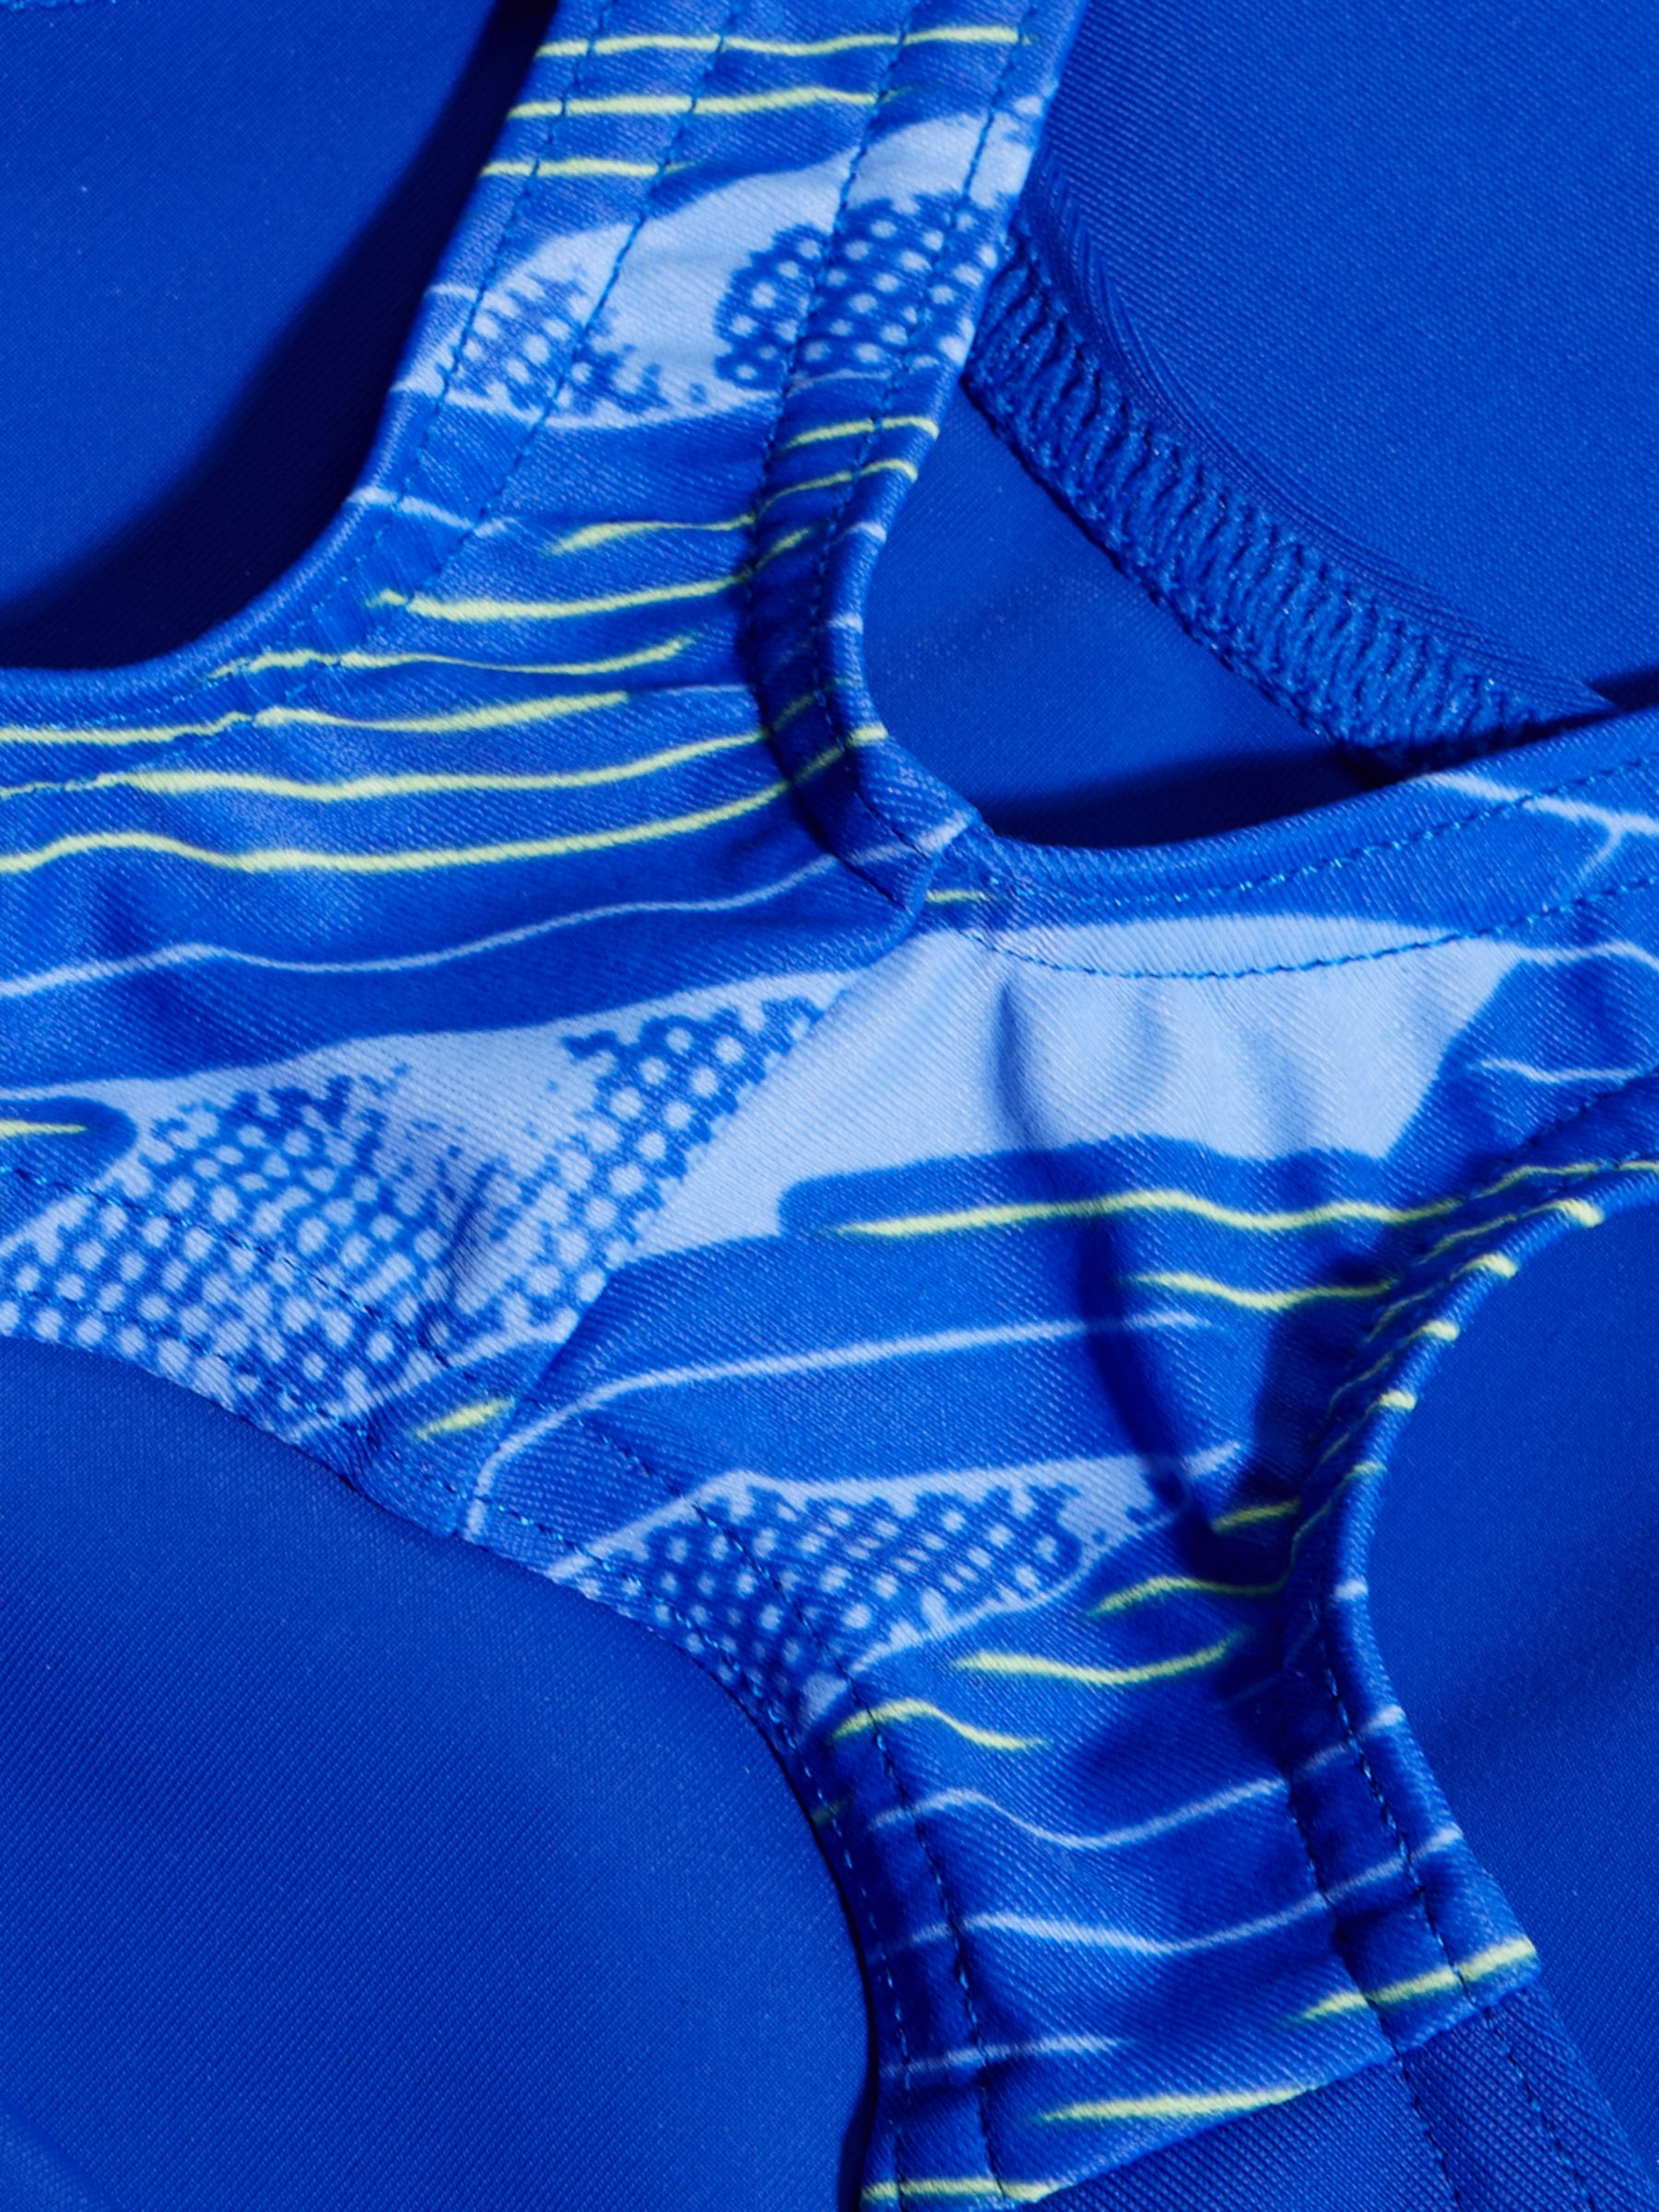 Buy Speedo Kids' Hyperboom Slice Graphic Muscleback Swimsuit, Blue/Multi Online at johnlewis.com